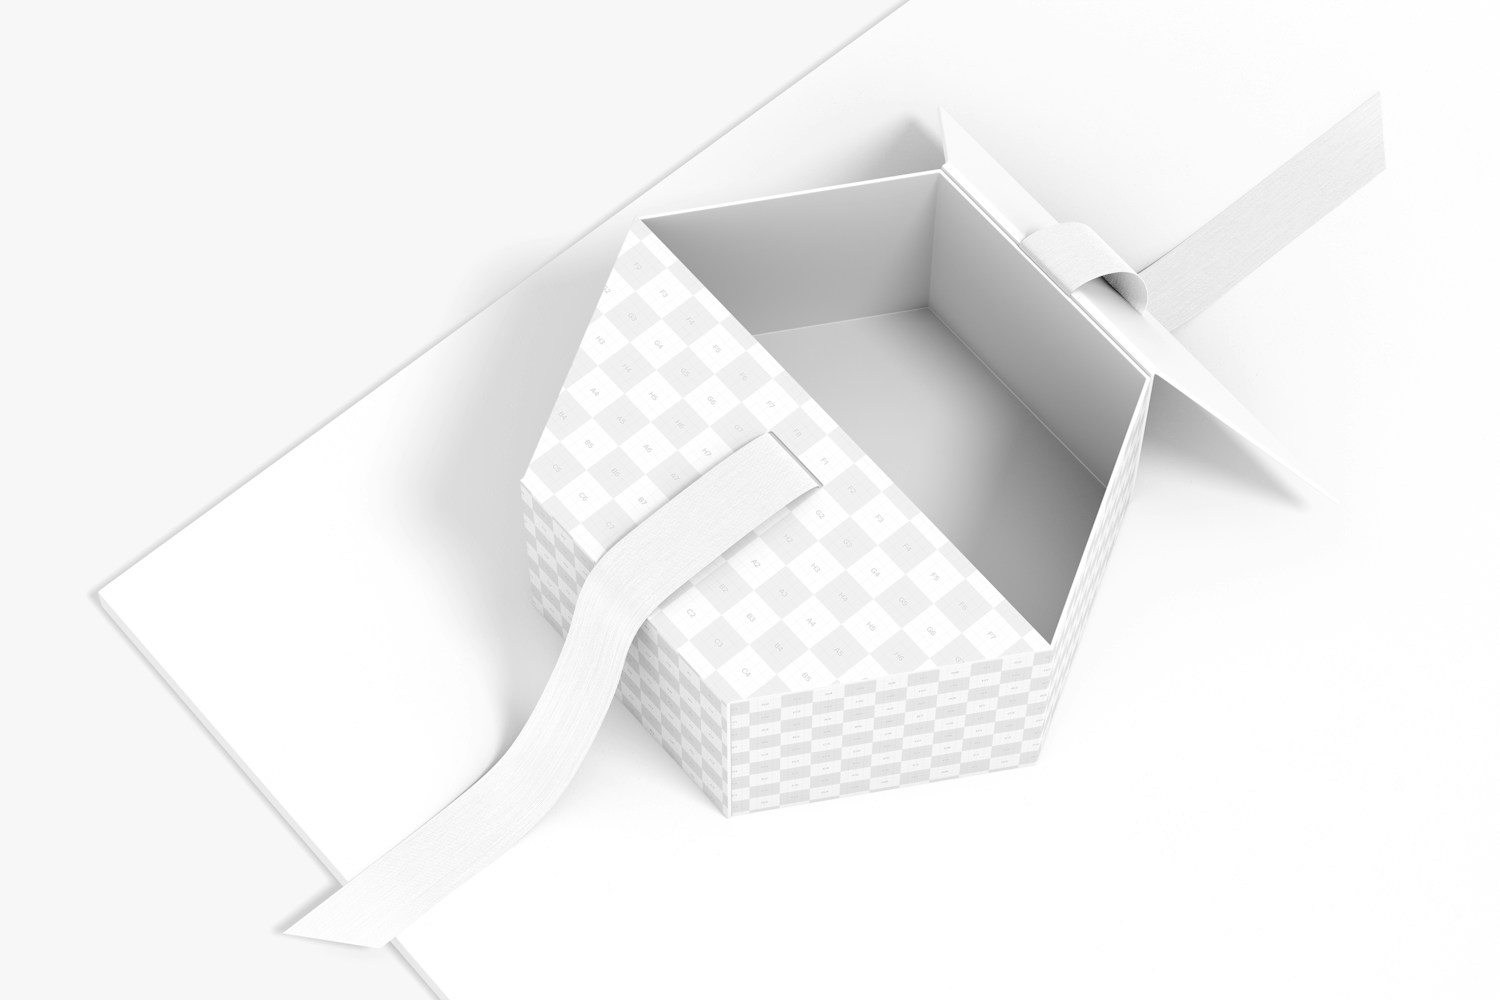 Hexagon Gift Box with Ribbon Mockup, Opened